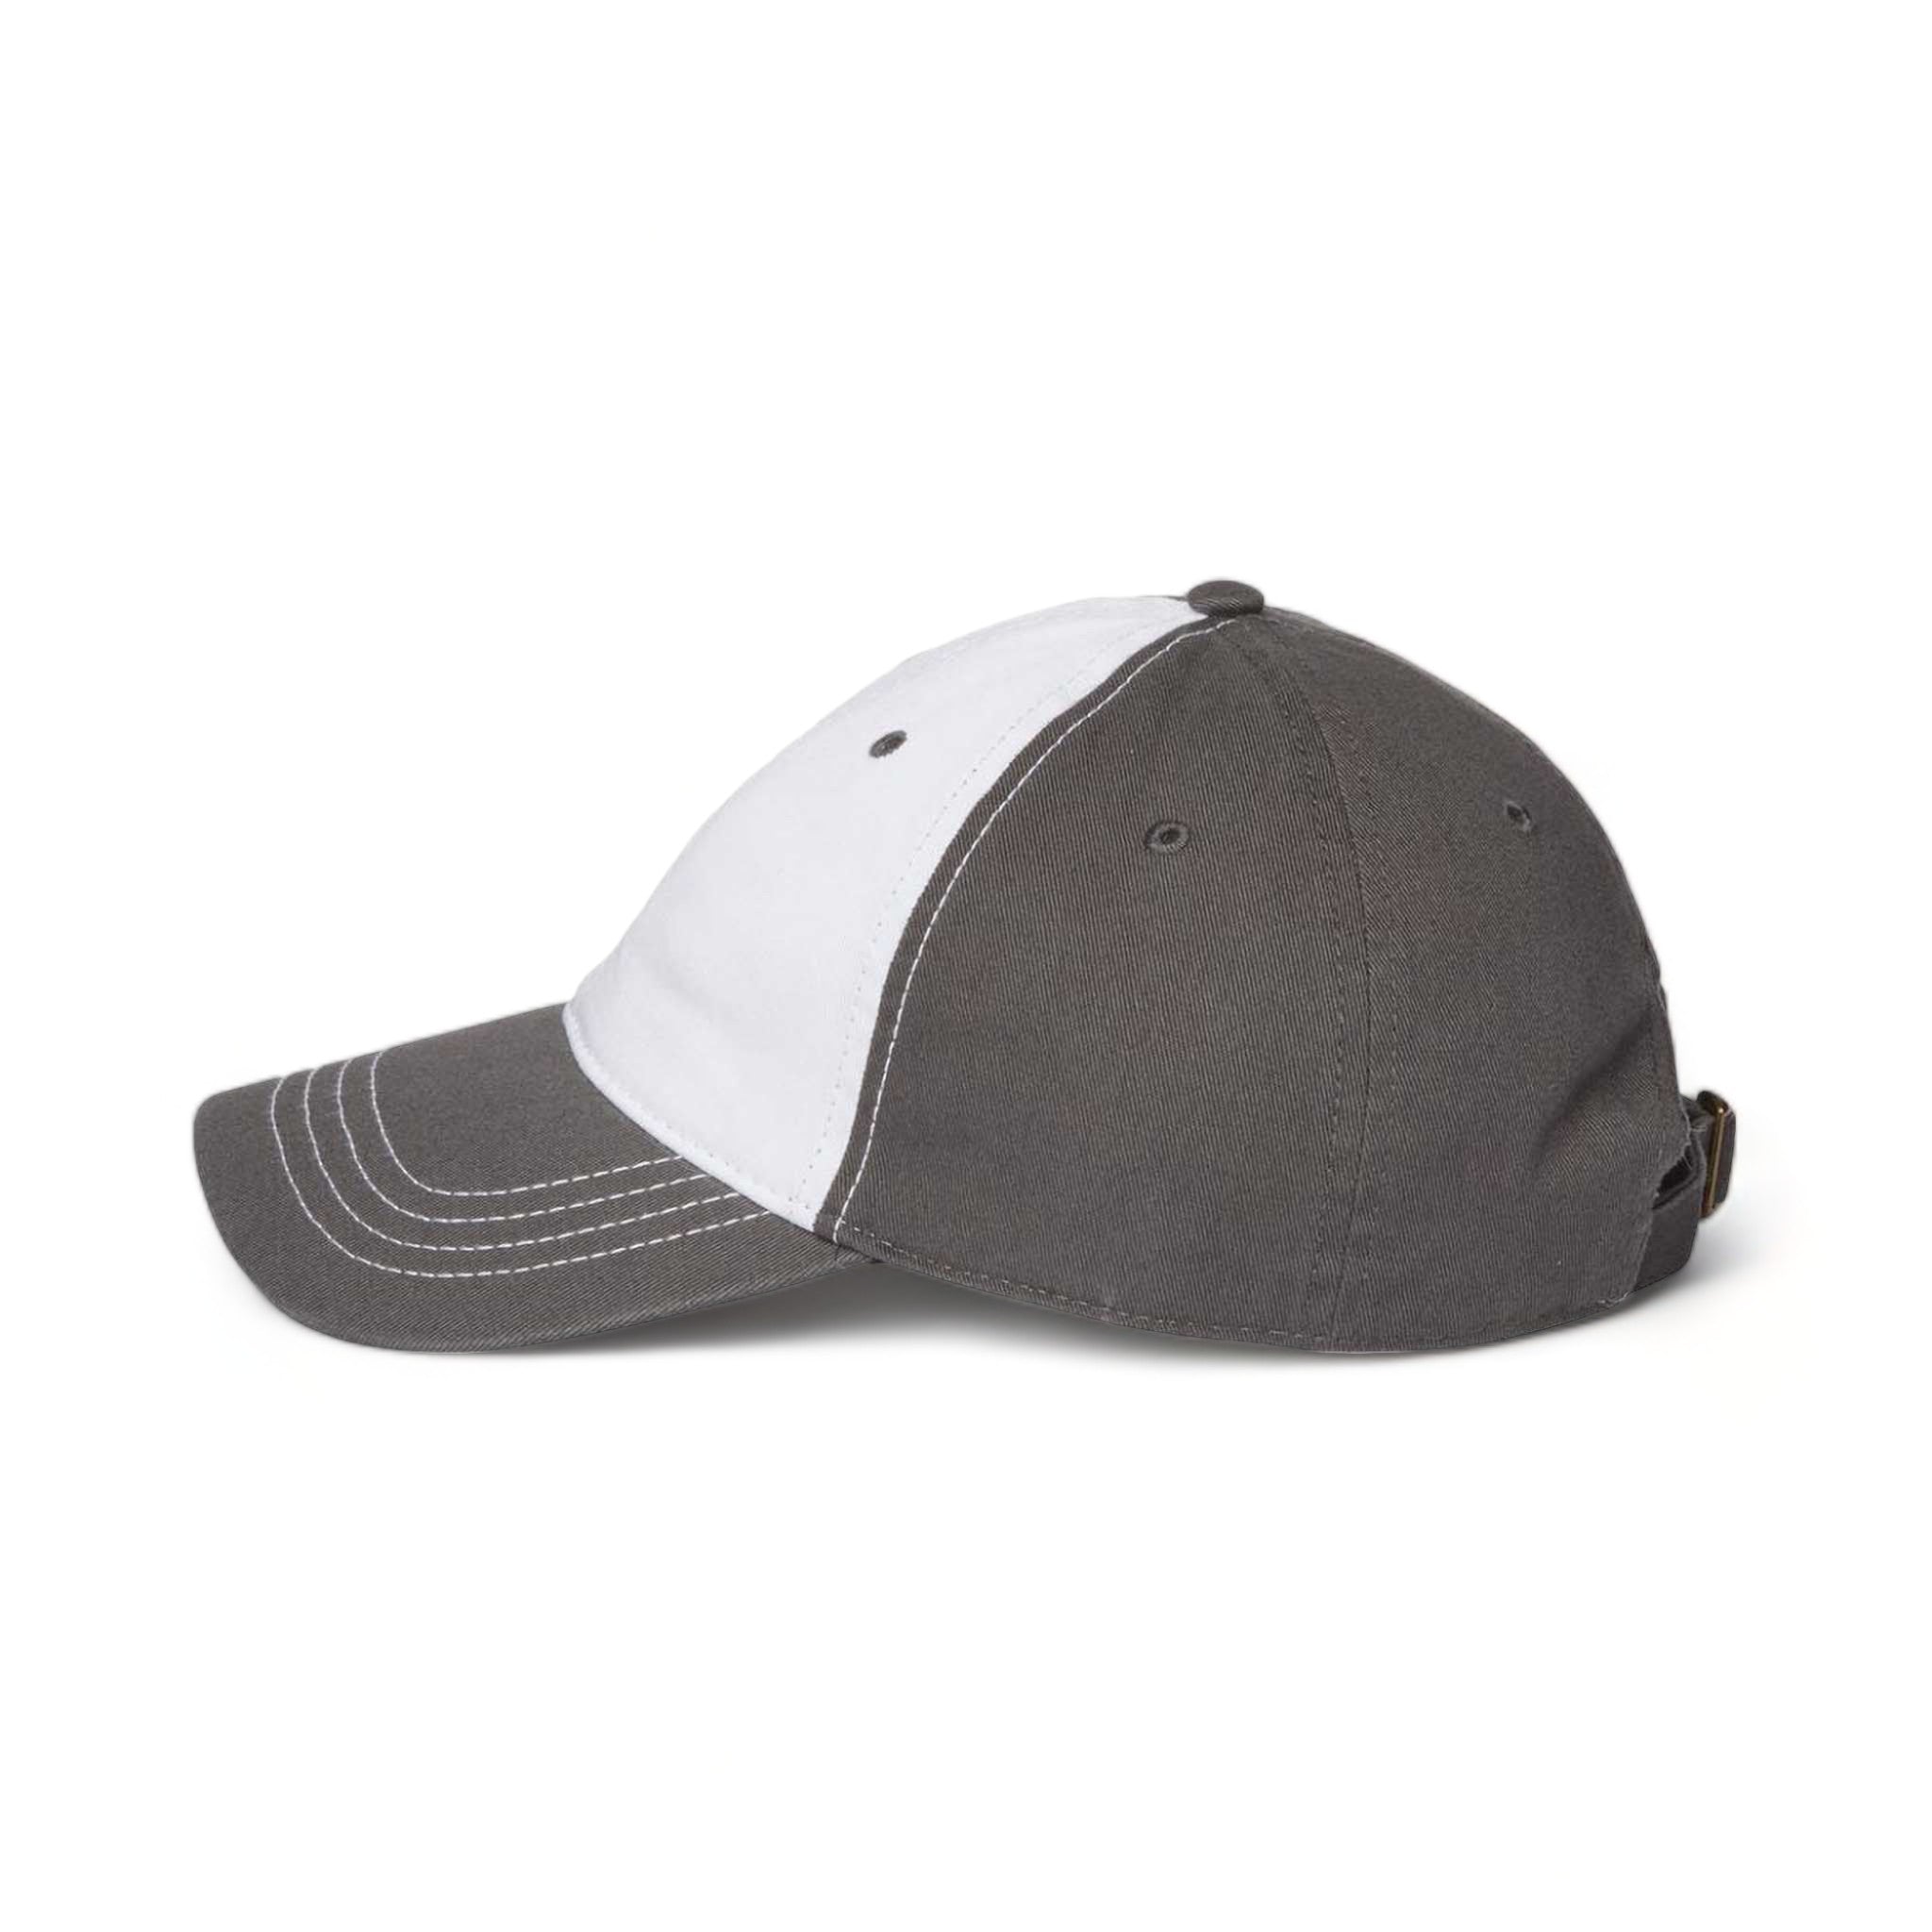 Side view of CAP AMERICA i1002 custom hat in white and dark grey